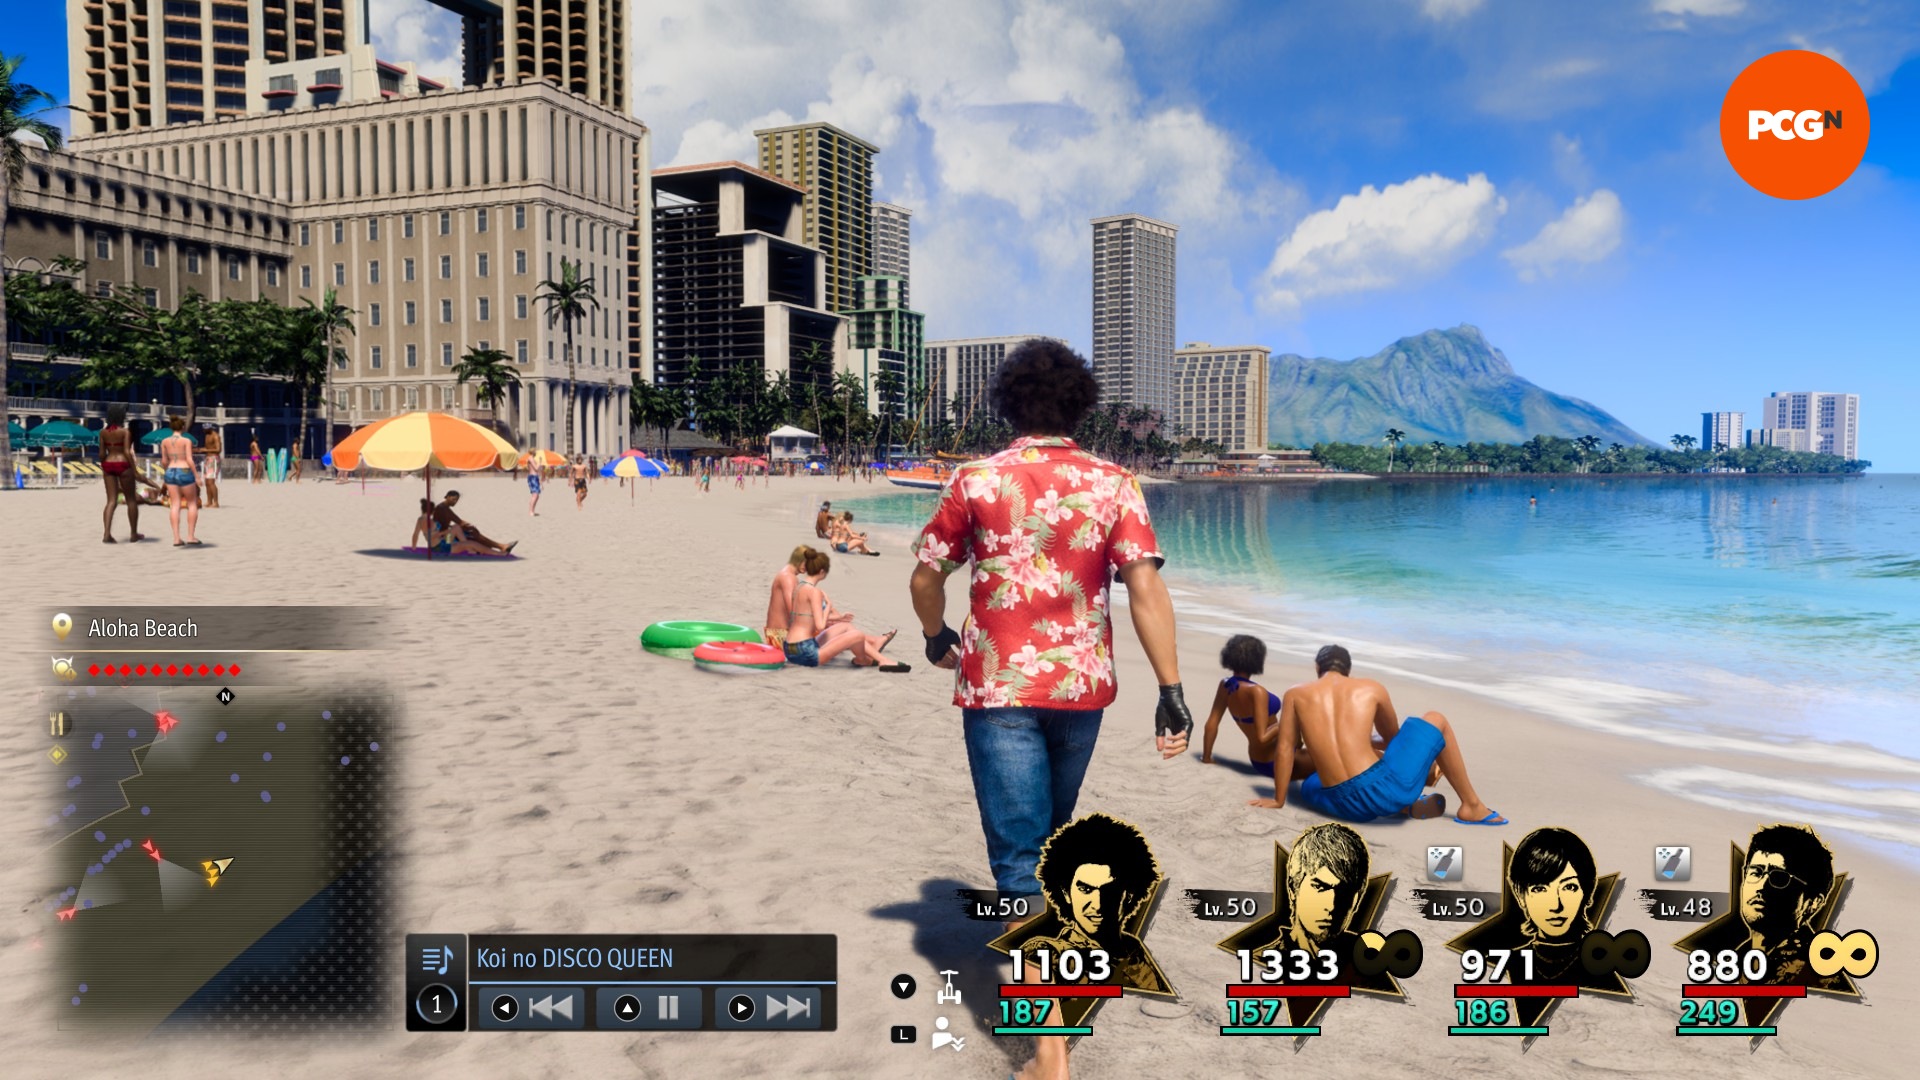 Ichiban strolls across Honolulu’s stunning beaches, surrounded by tourists.